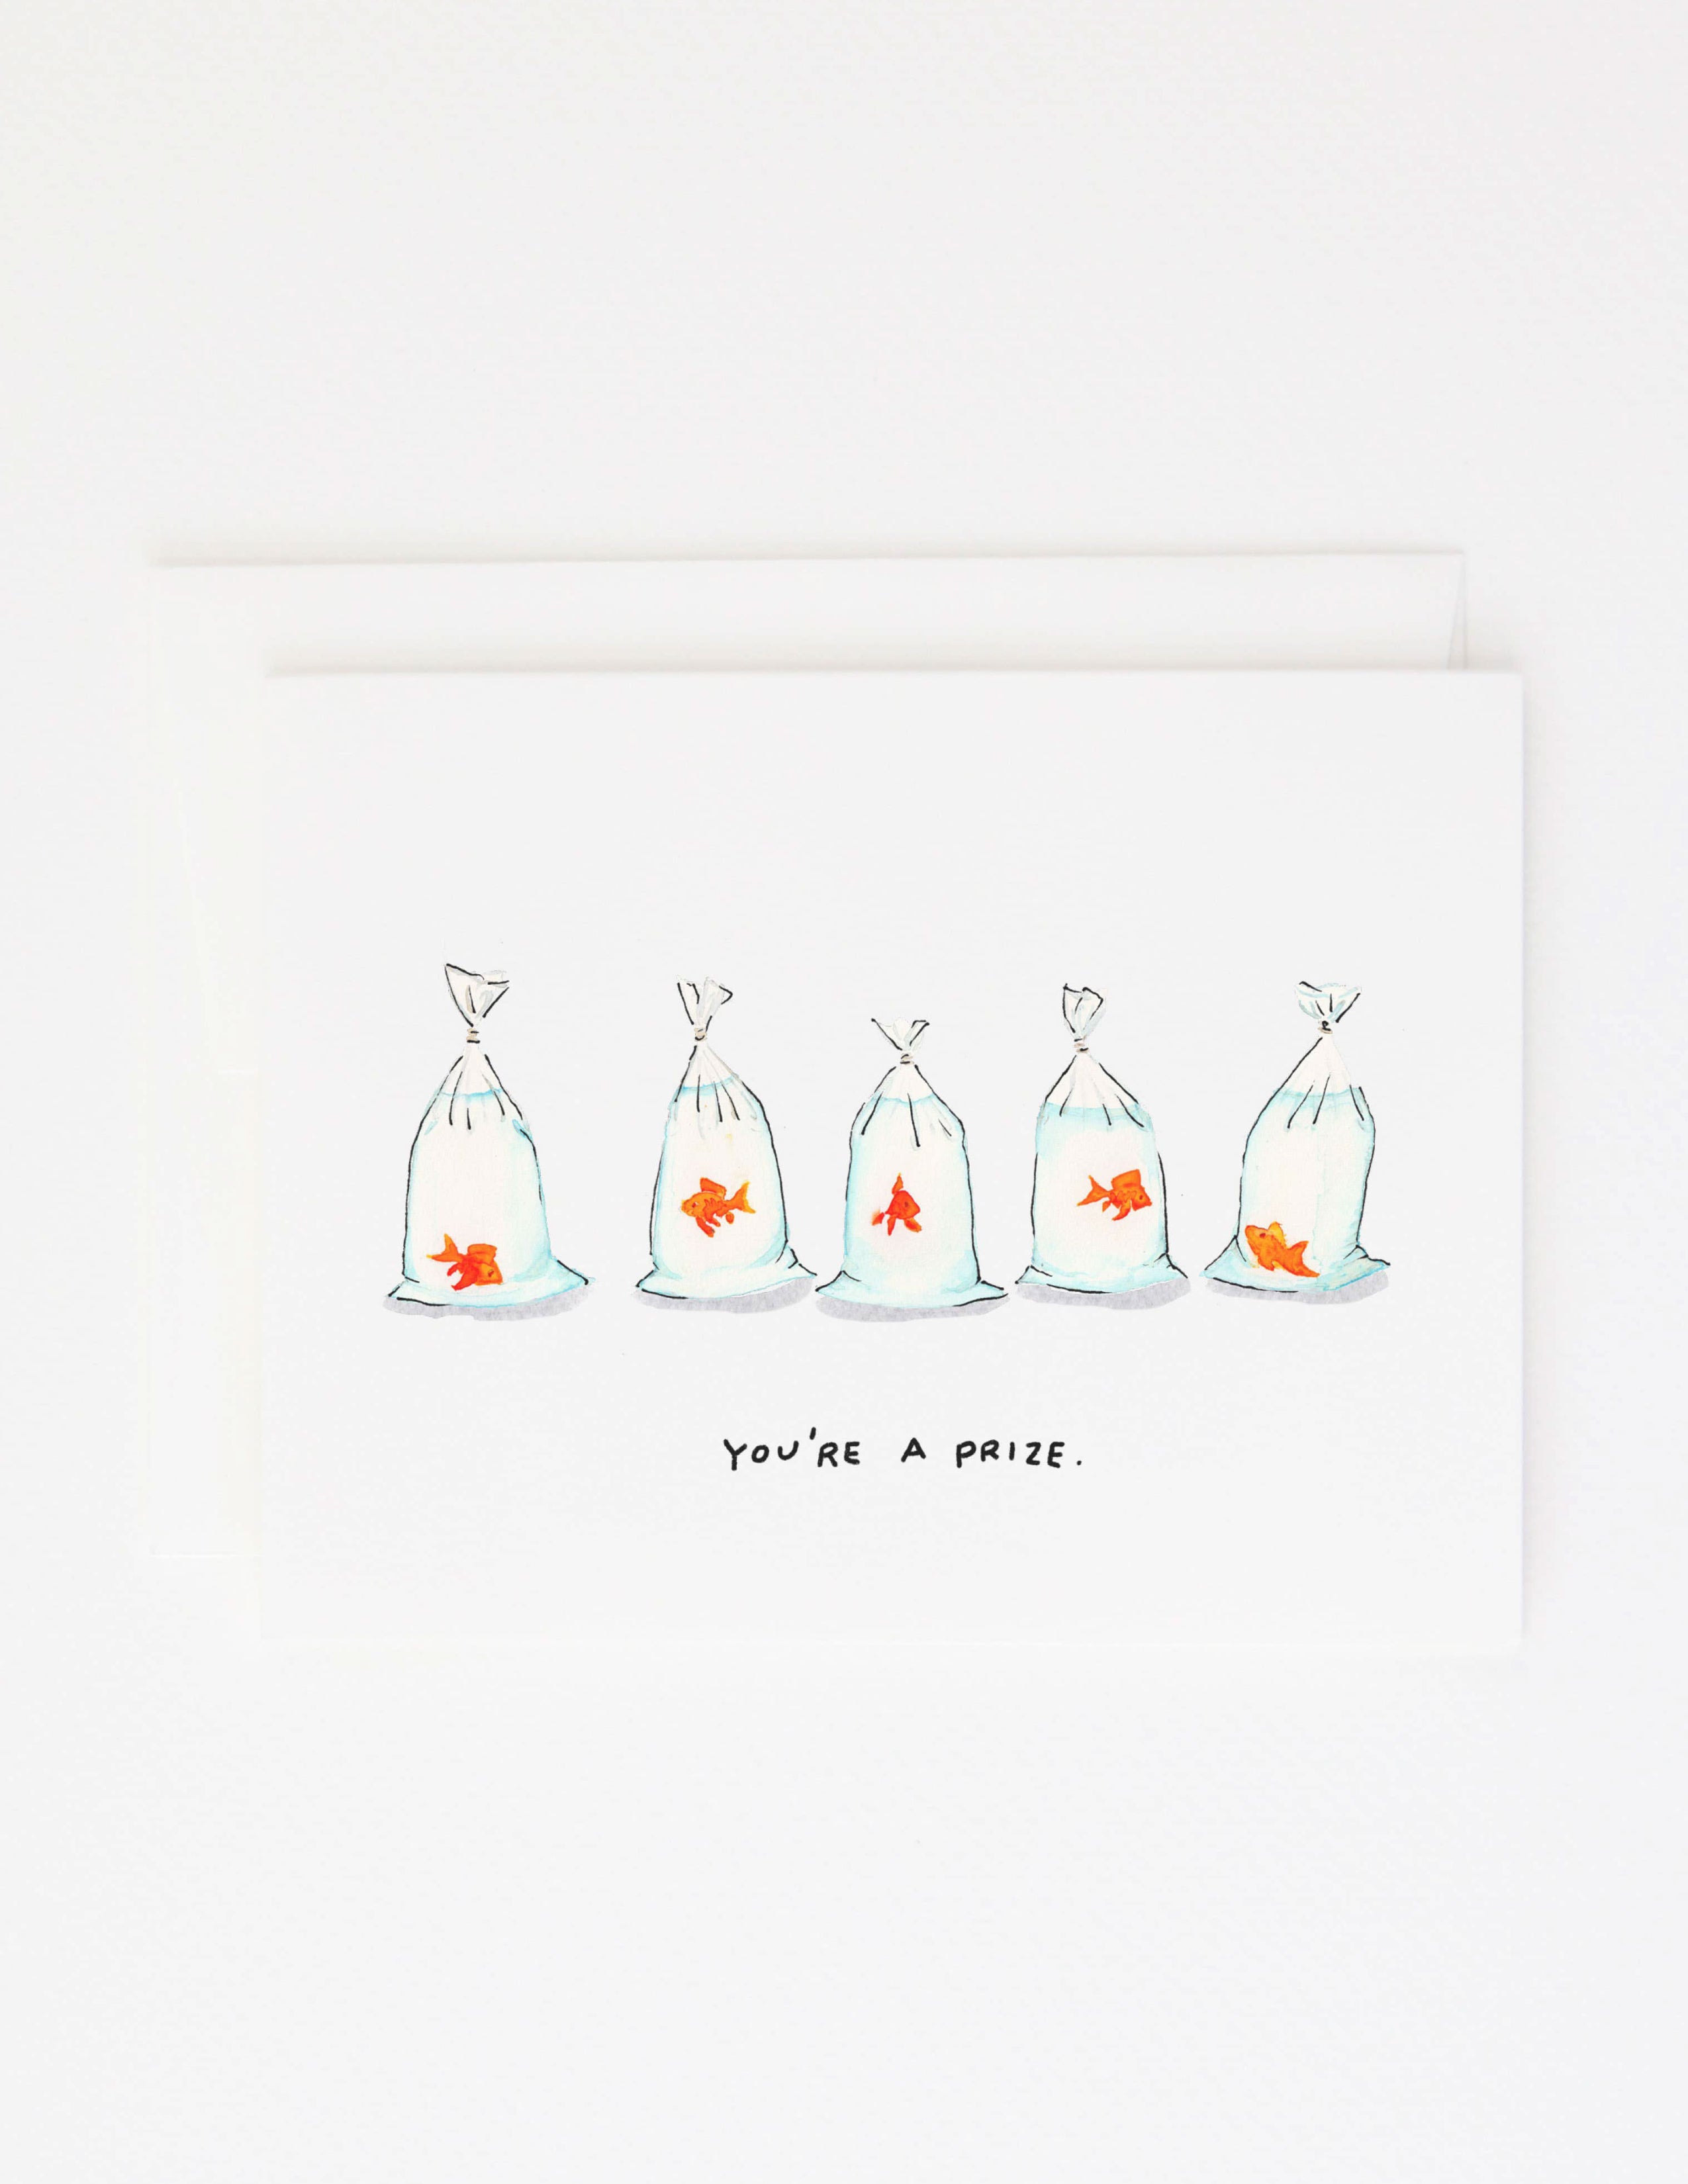 Goldfish Card